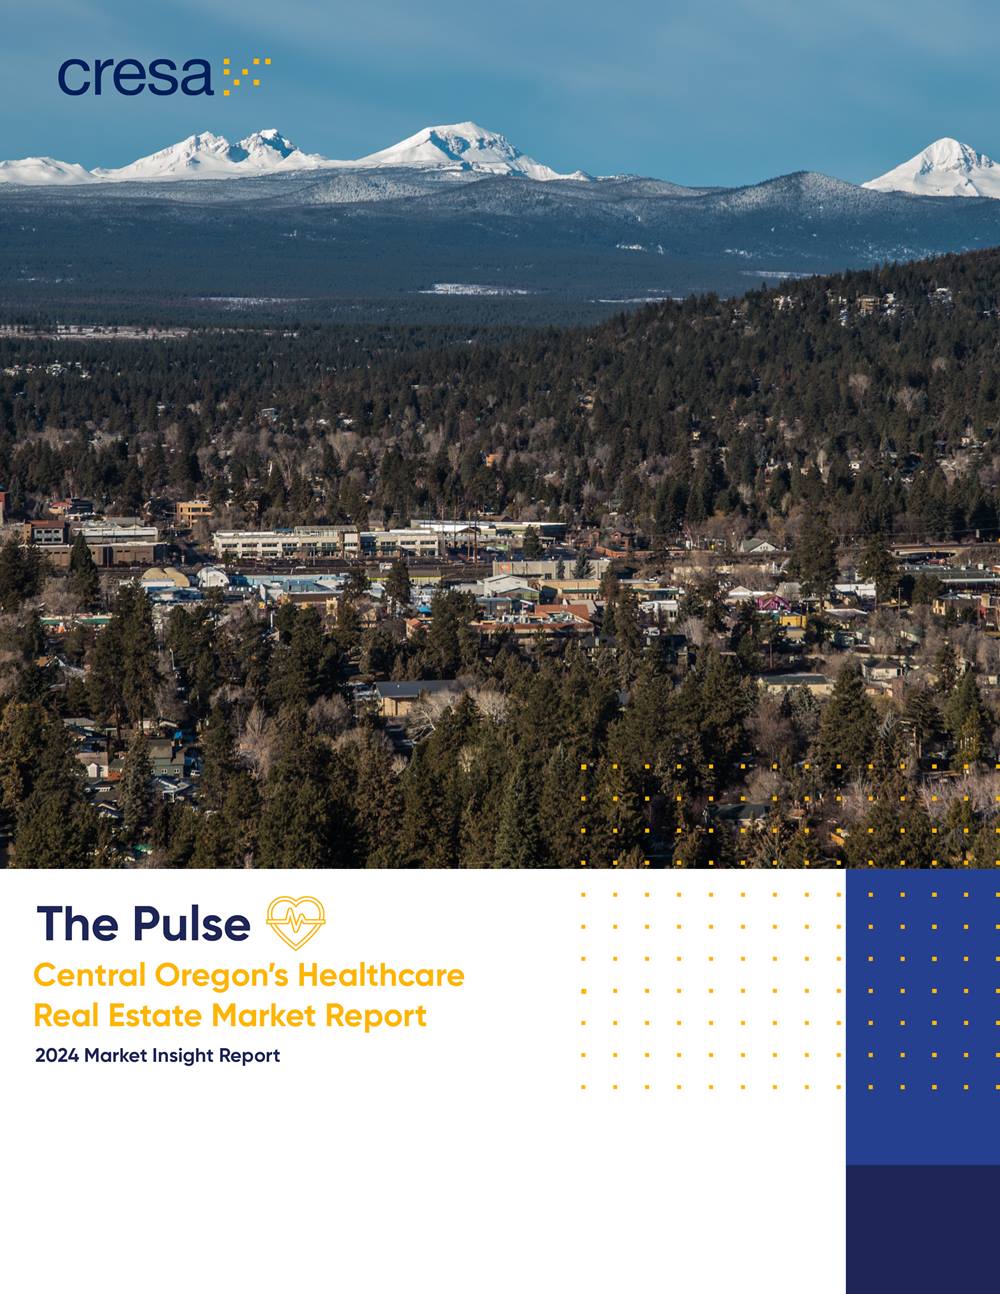 Central Oregon Healthcare Market report